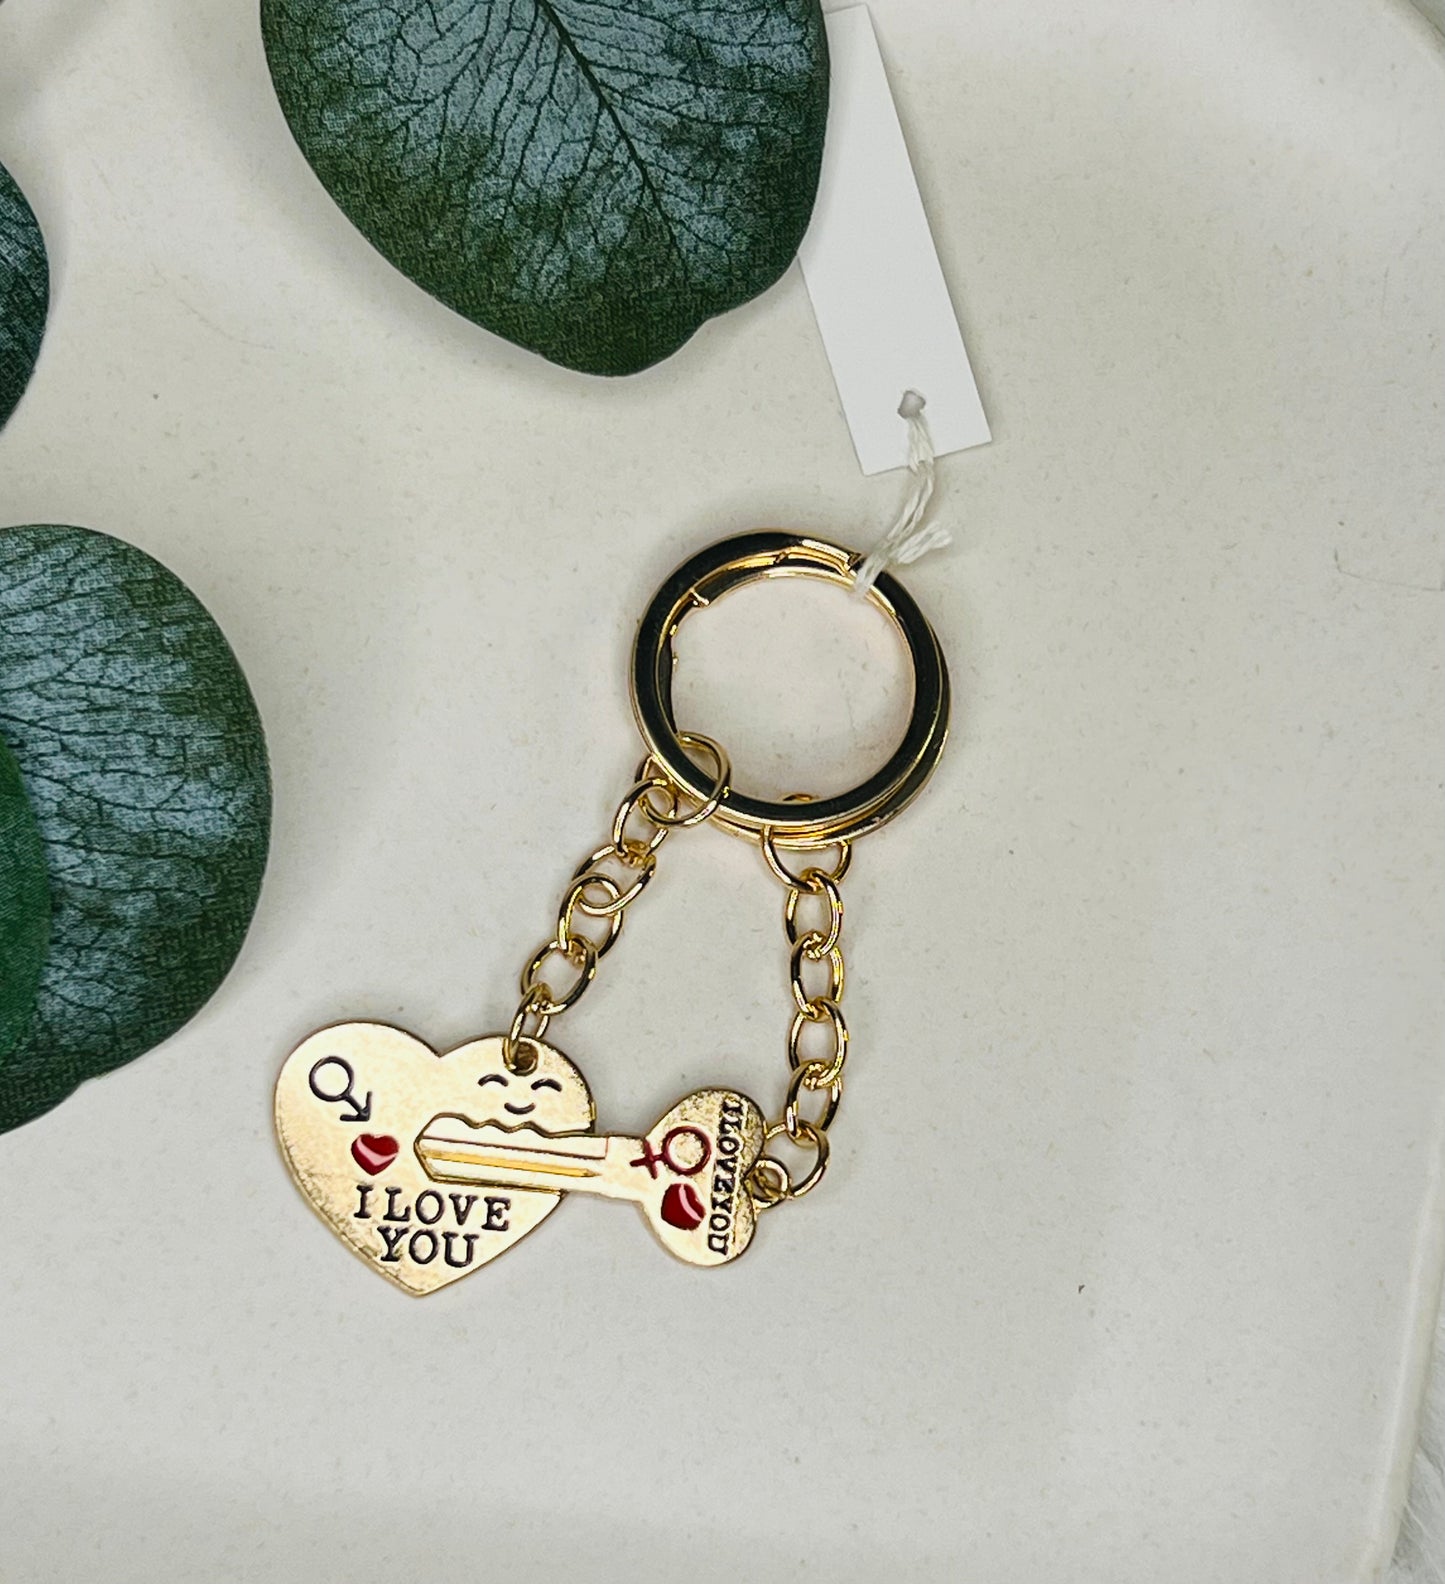 I Love You Heart and Key Keychain - Set of 2